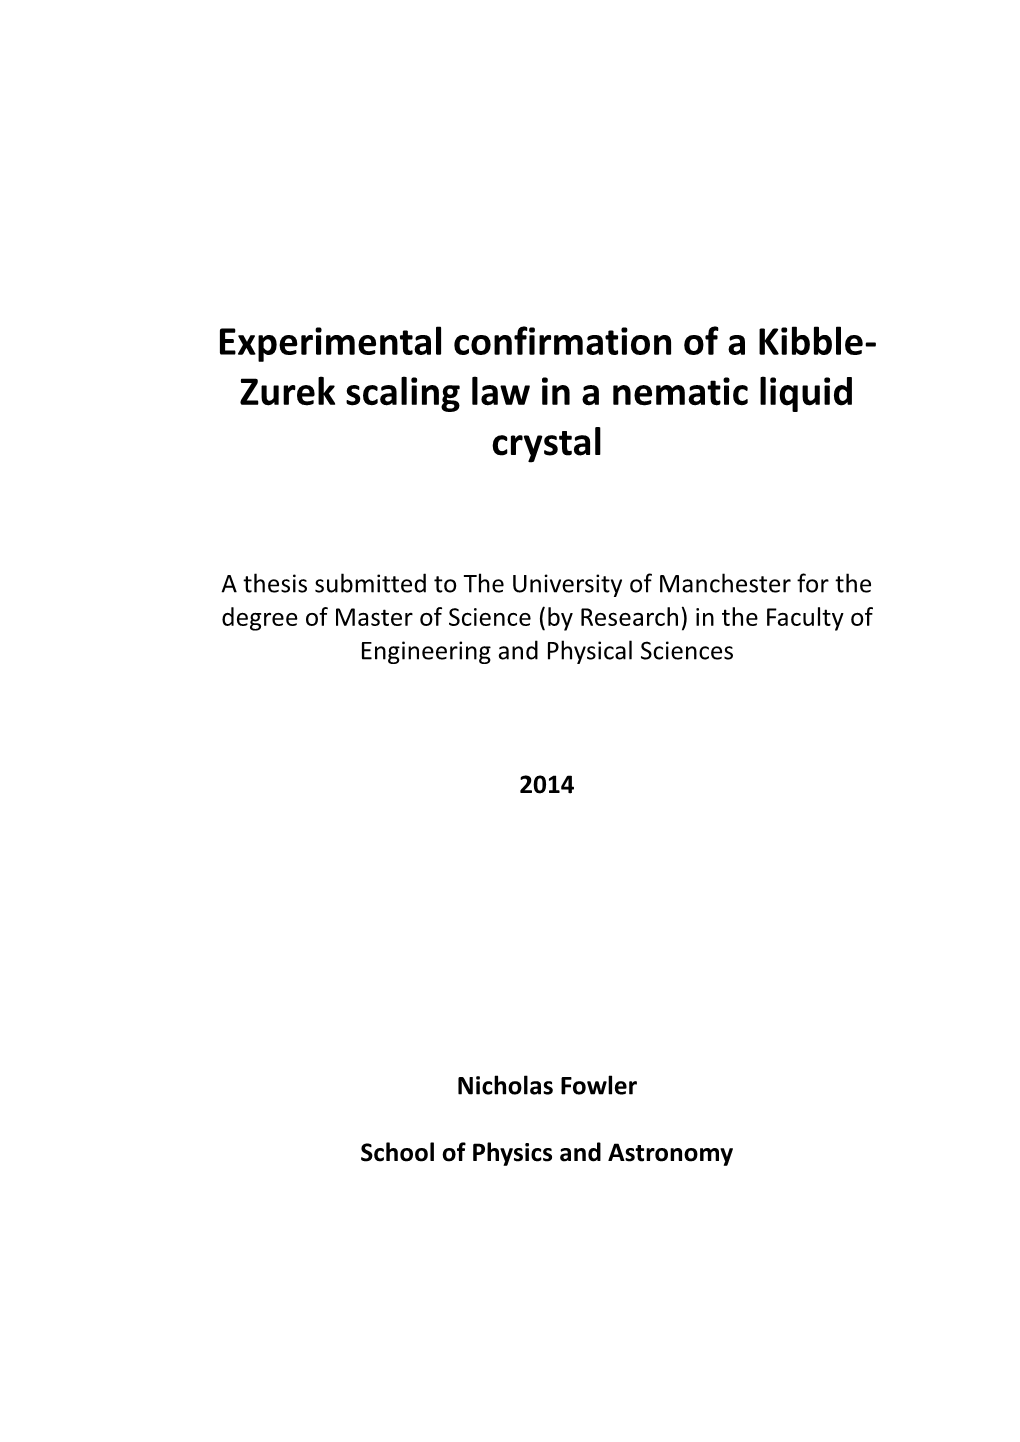 Experimental Confirmation of a Kibble- Zurek Scaling Law in a Nematic Liquid Crystal